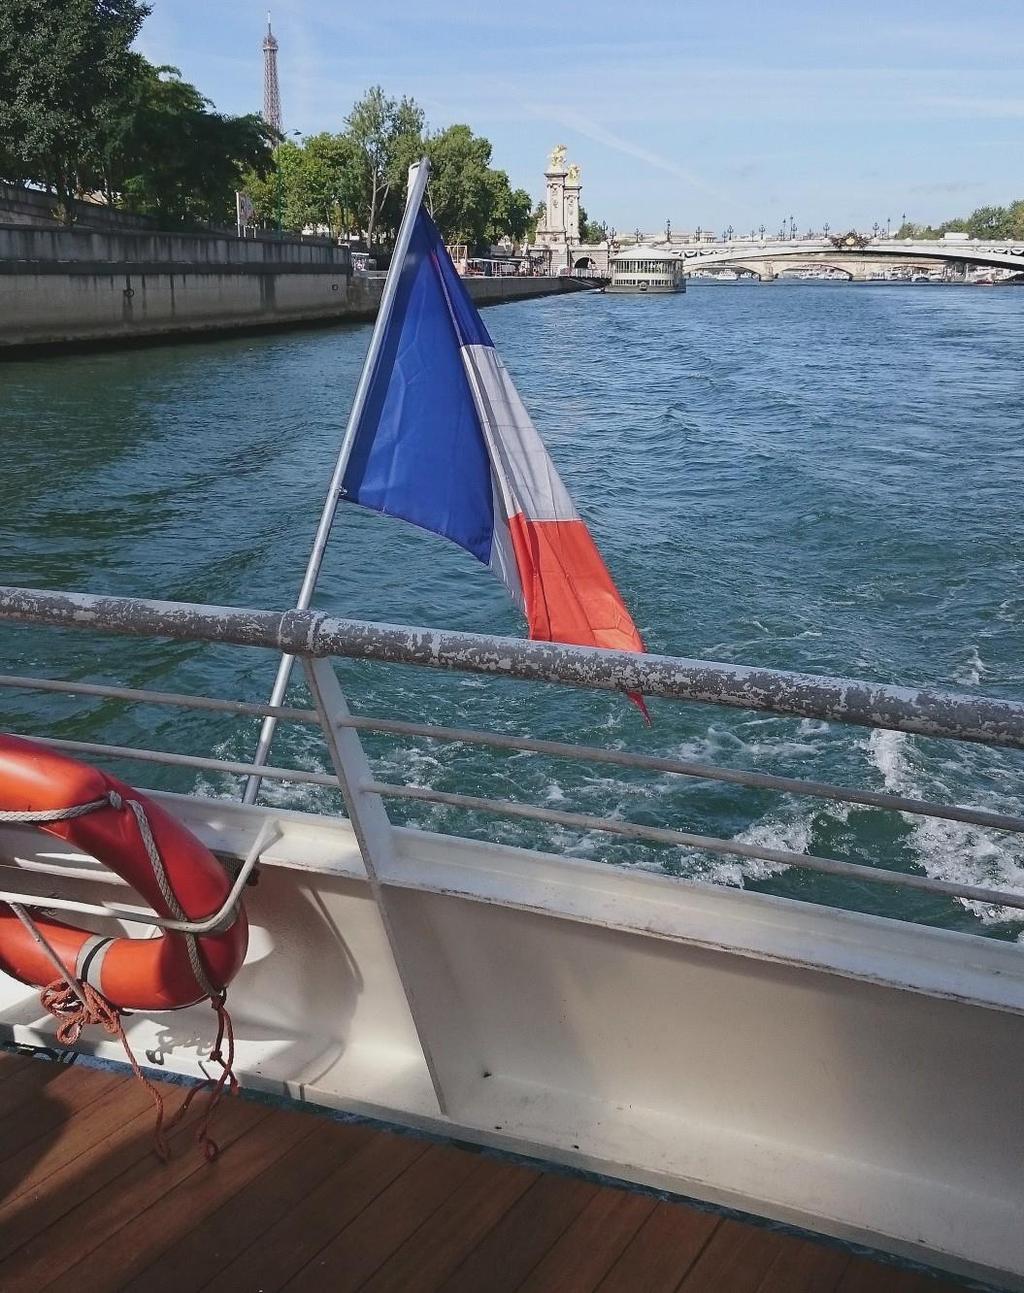 THE RIVER SHUTTLE SERVICE Batobus is a river transport shuttle service on the River Seine.